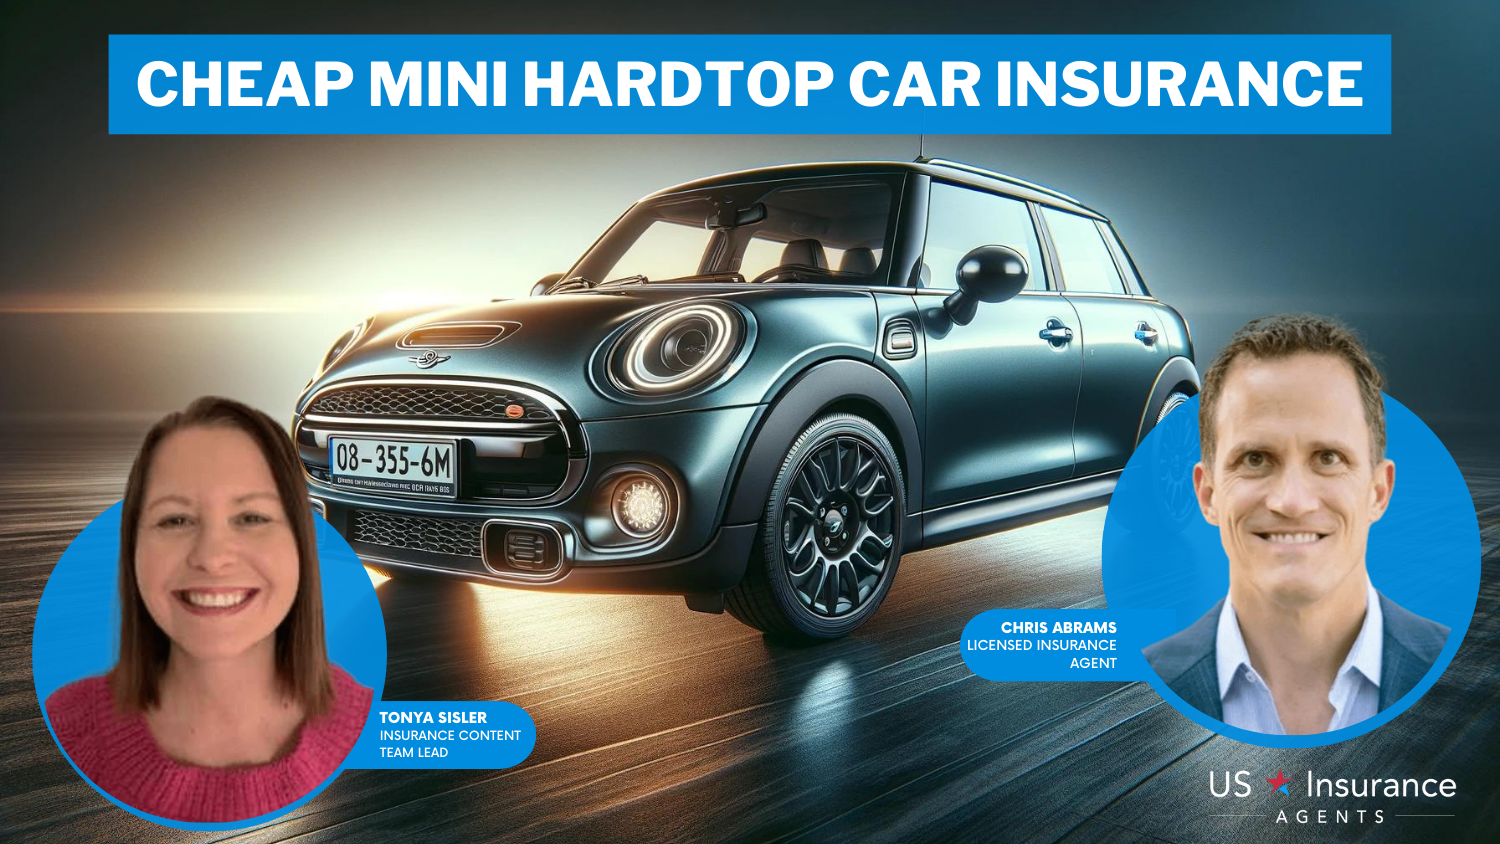 Cheap MINI Hardtop Car Insurance: Nationwide, Progressive, and Auto-Owners